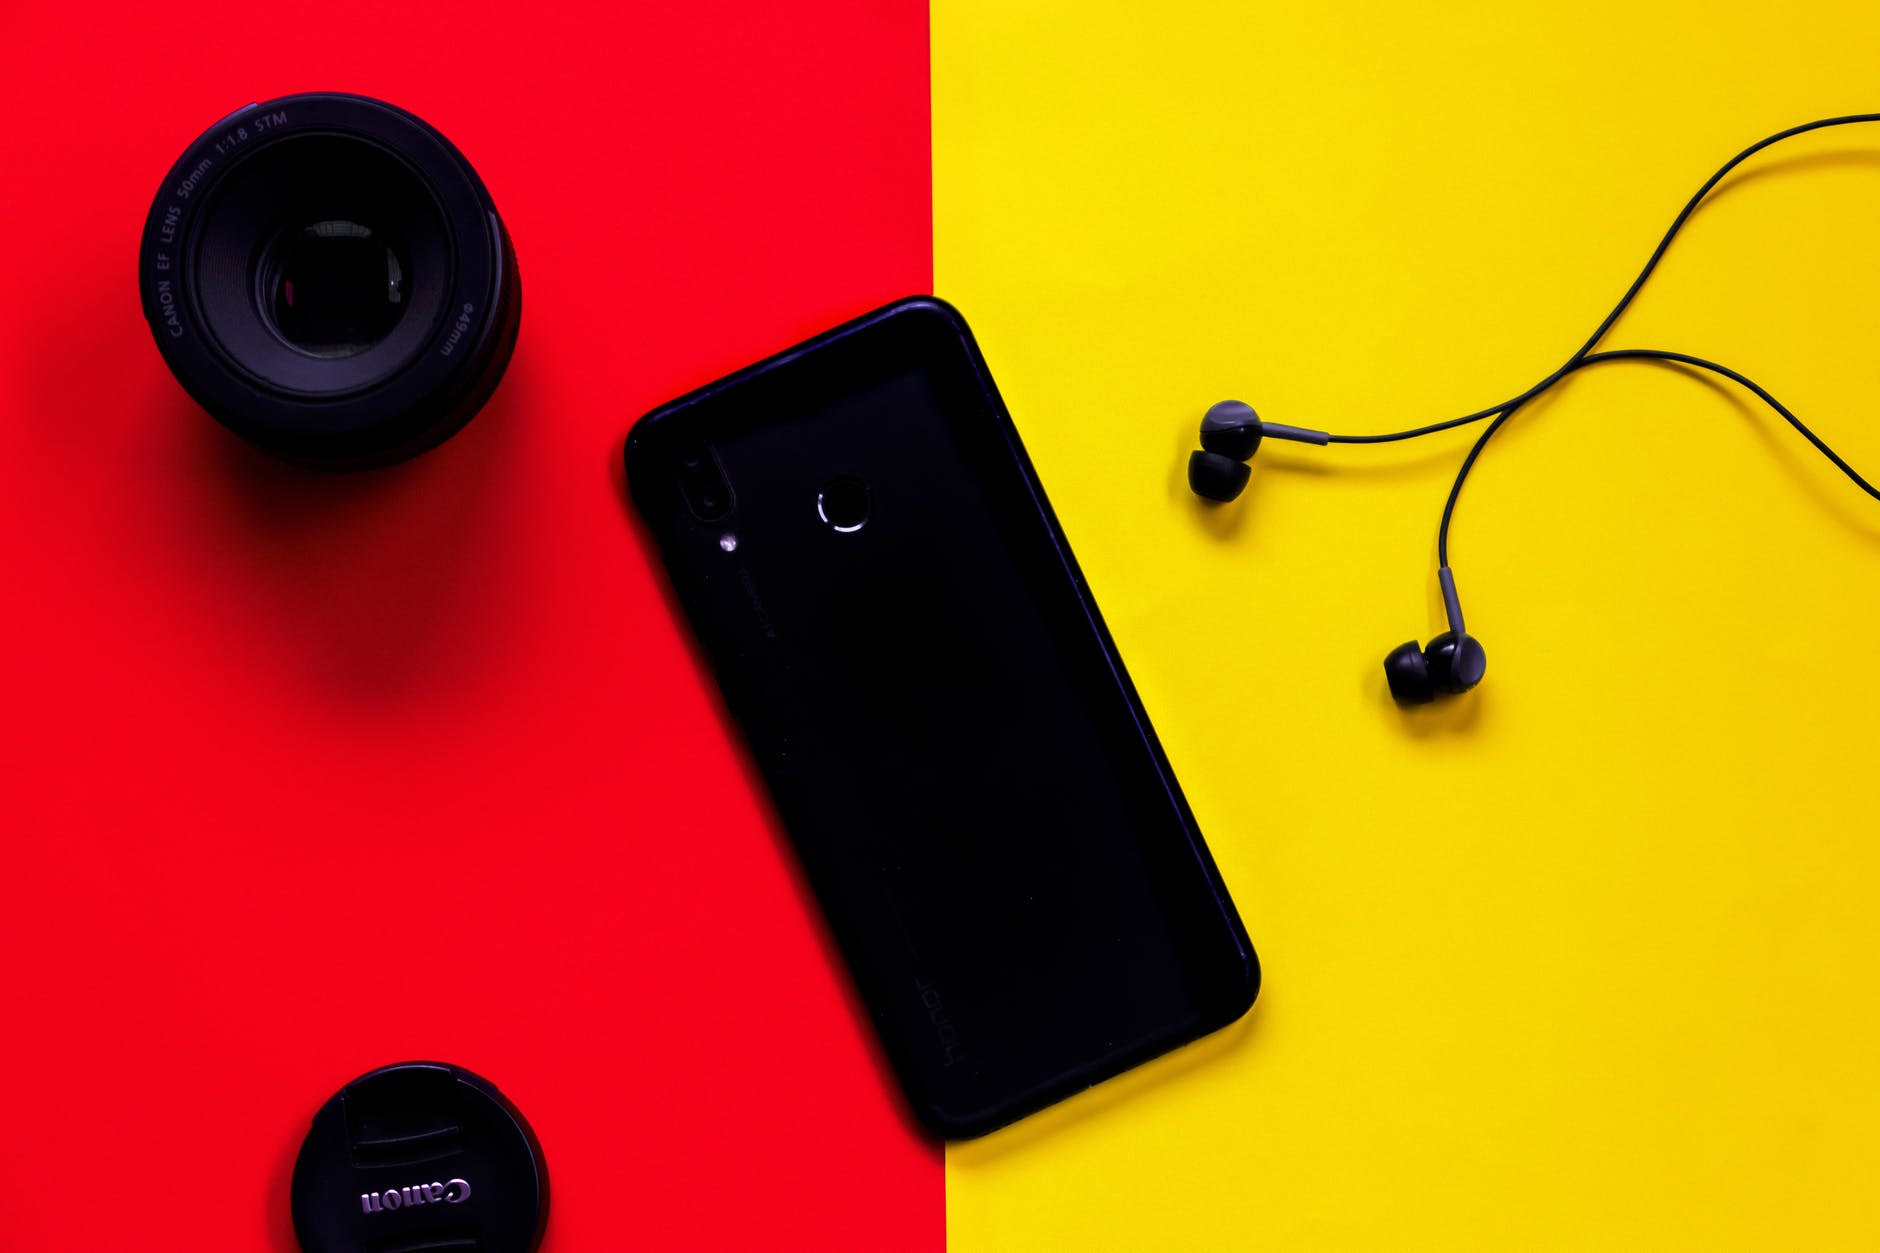 black smartphone besides earphones and camera lens